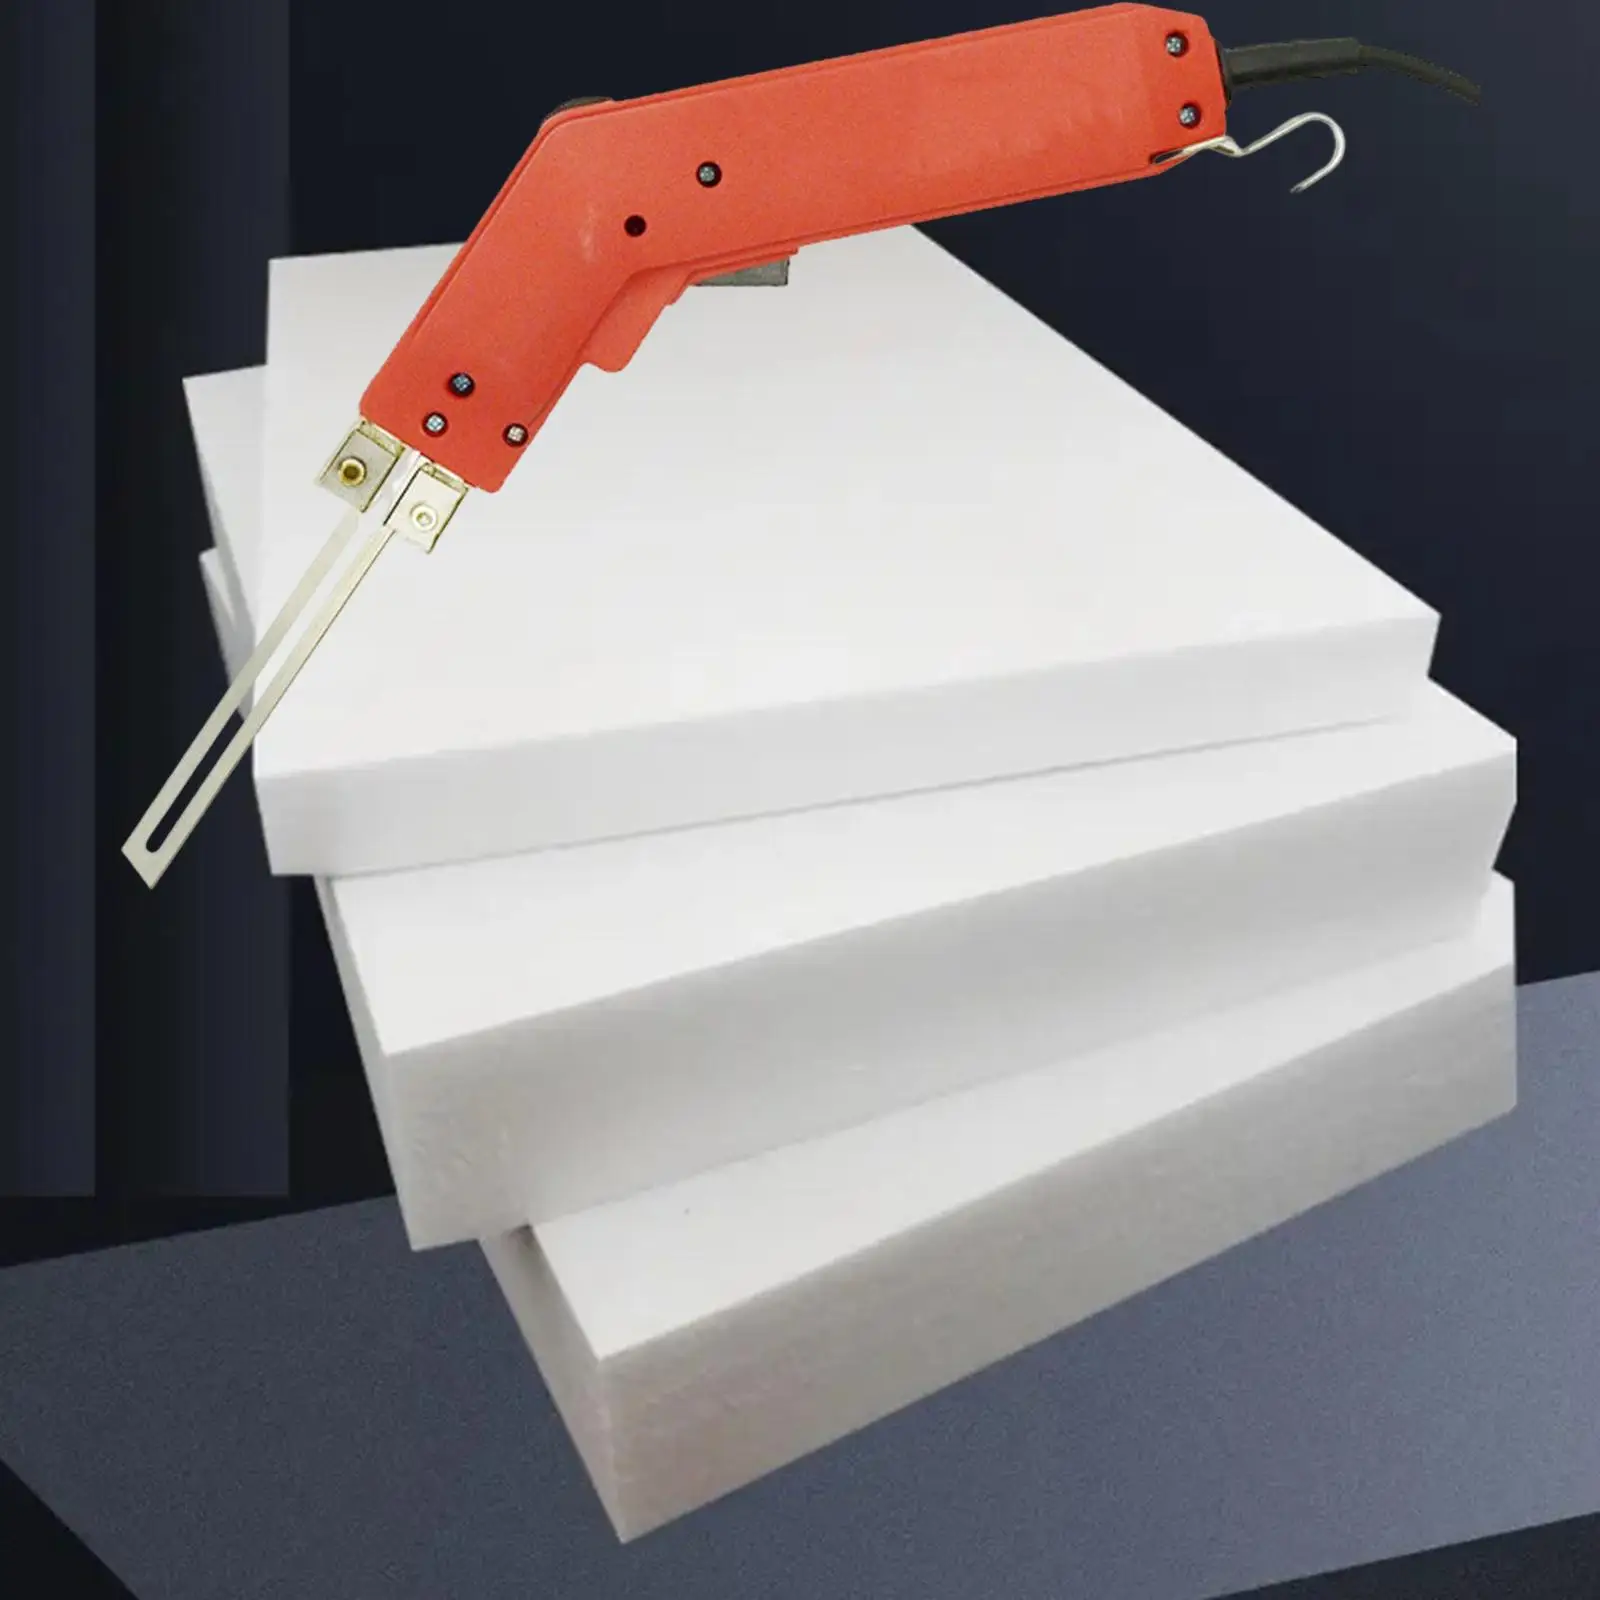 Portable Electric Hot Knife Cutting Tool Styrofoam Heated Knife Sponge Foams Cutter for PU Board Acrylic Cloth Rope Sculpting